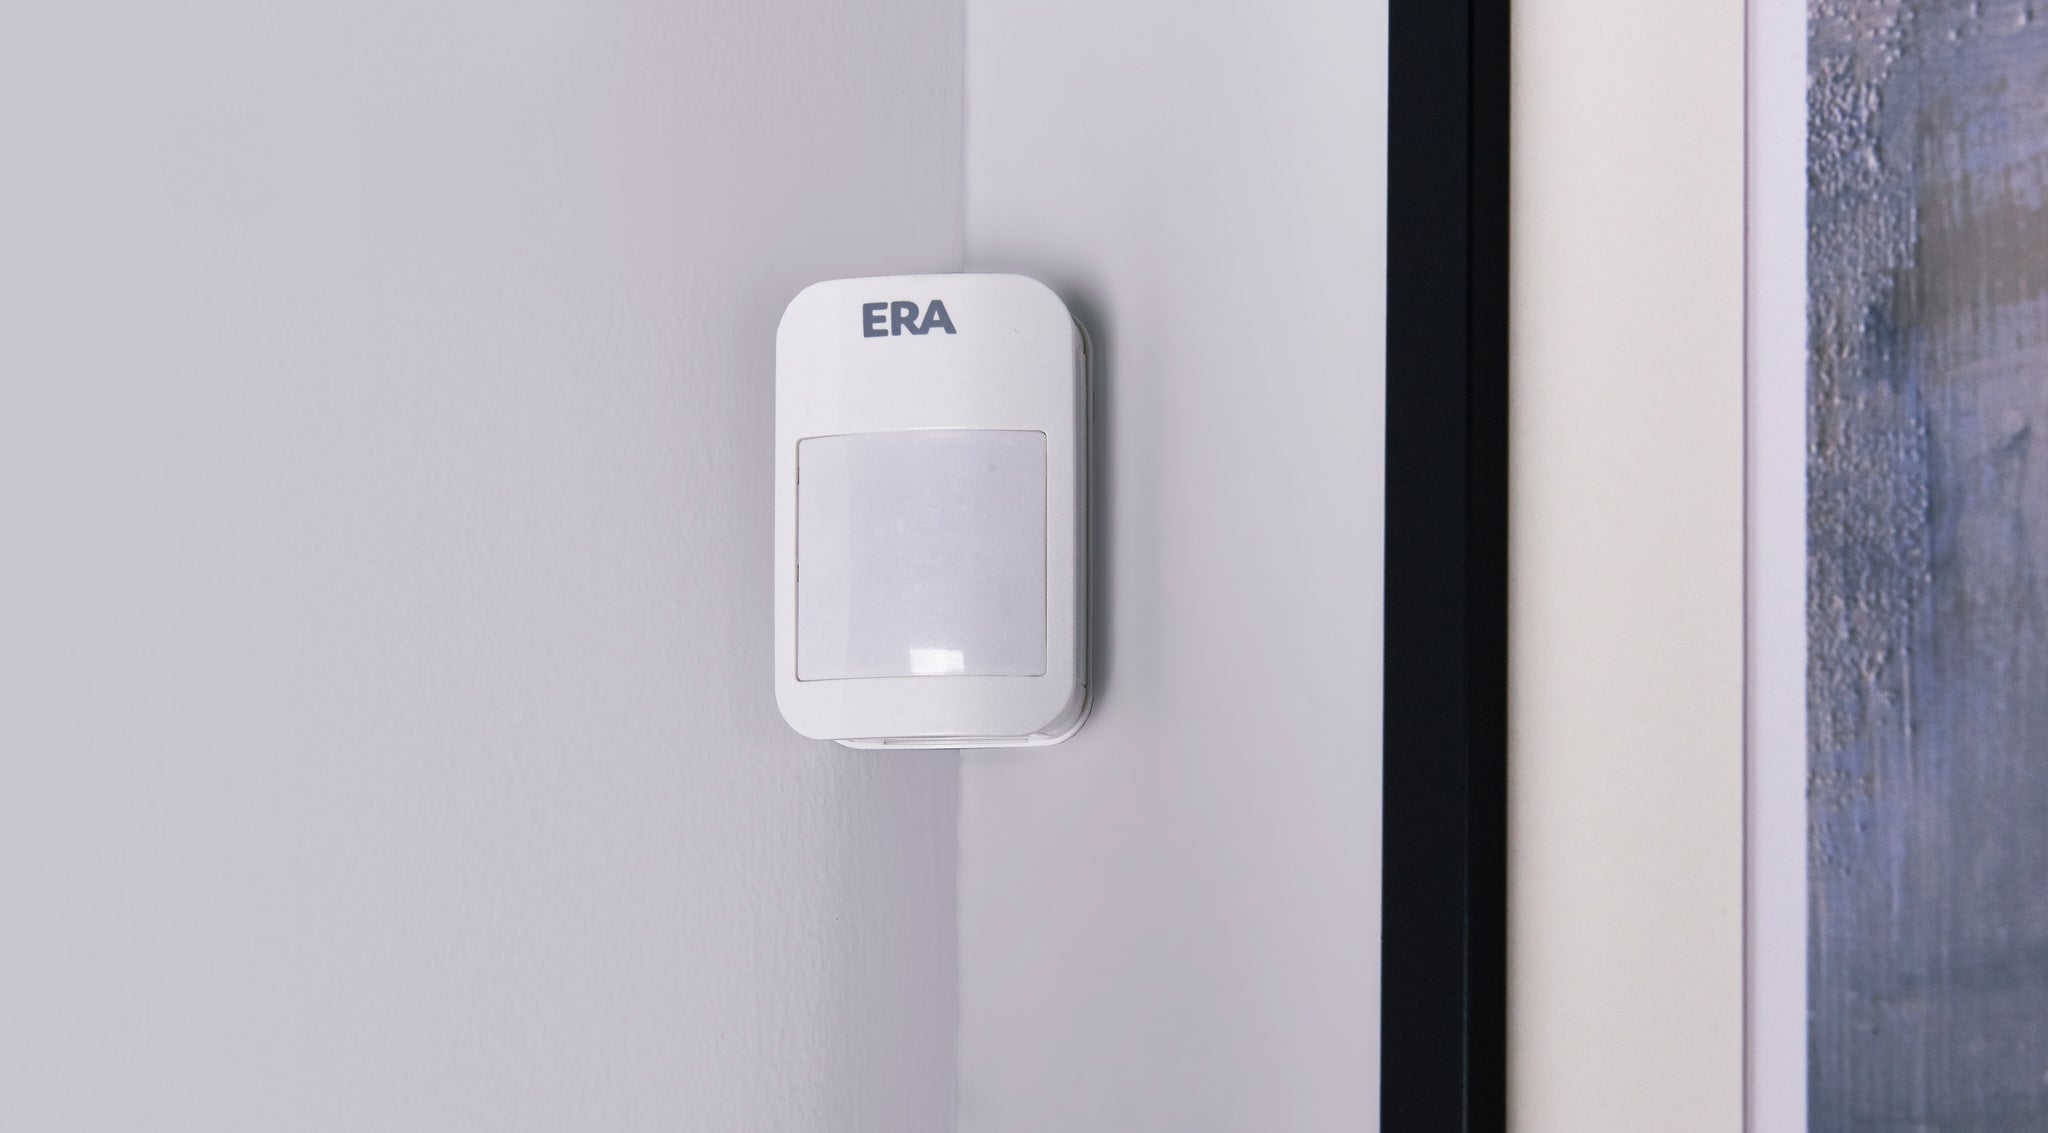 ERA Protect Smart Home Alarm Kit (6 Piece Bundle)